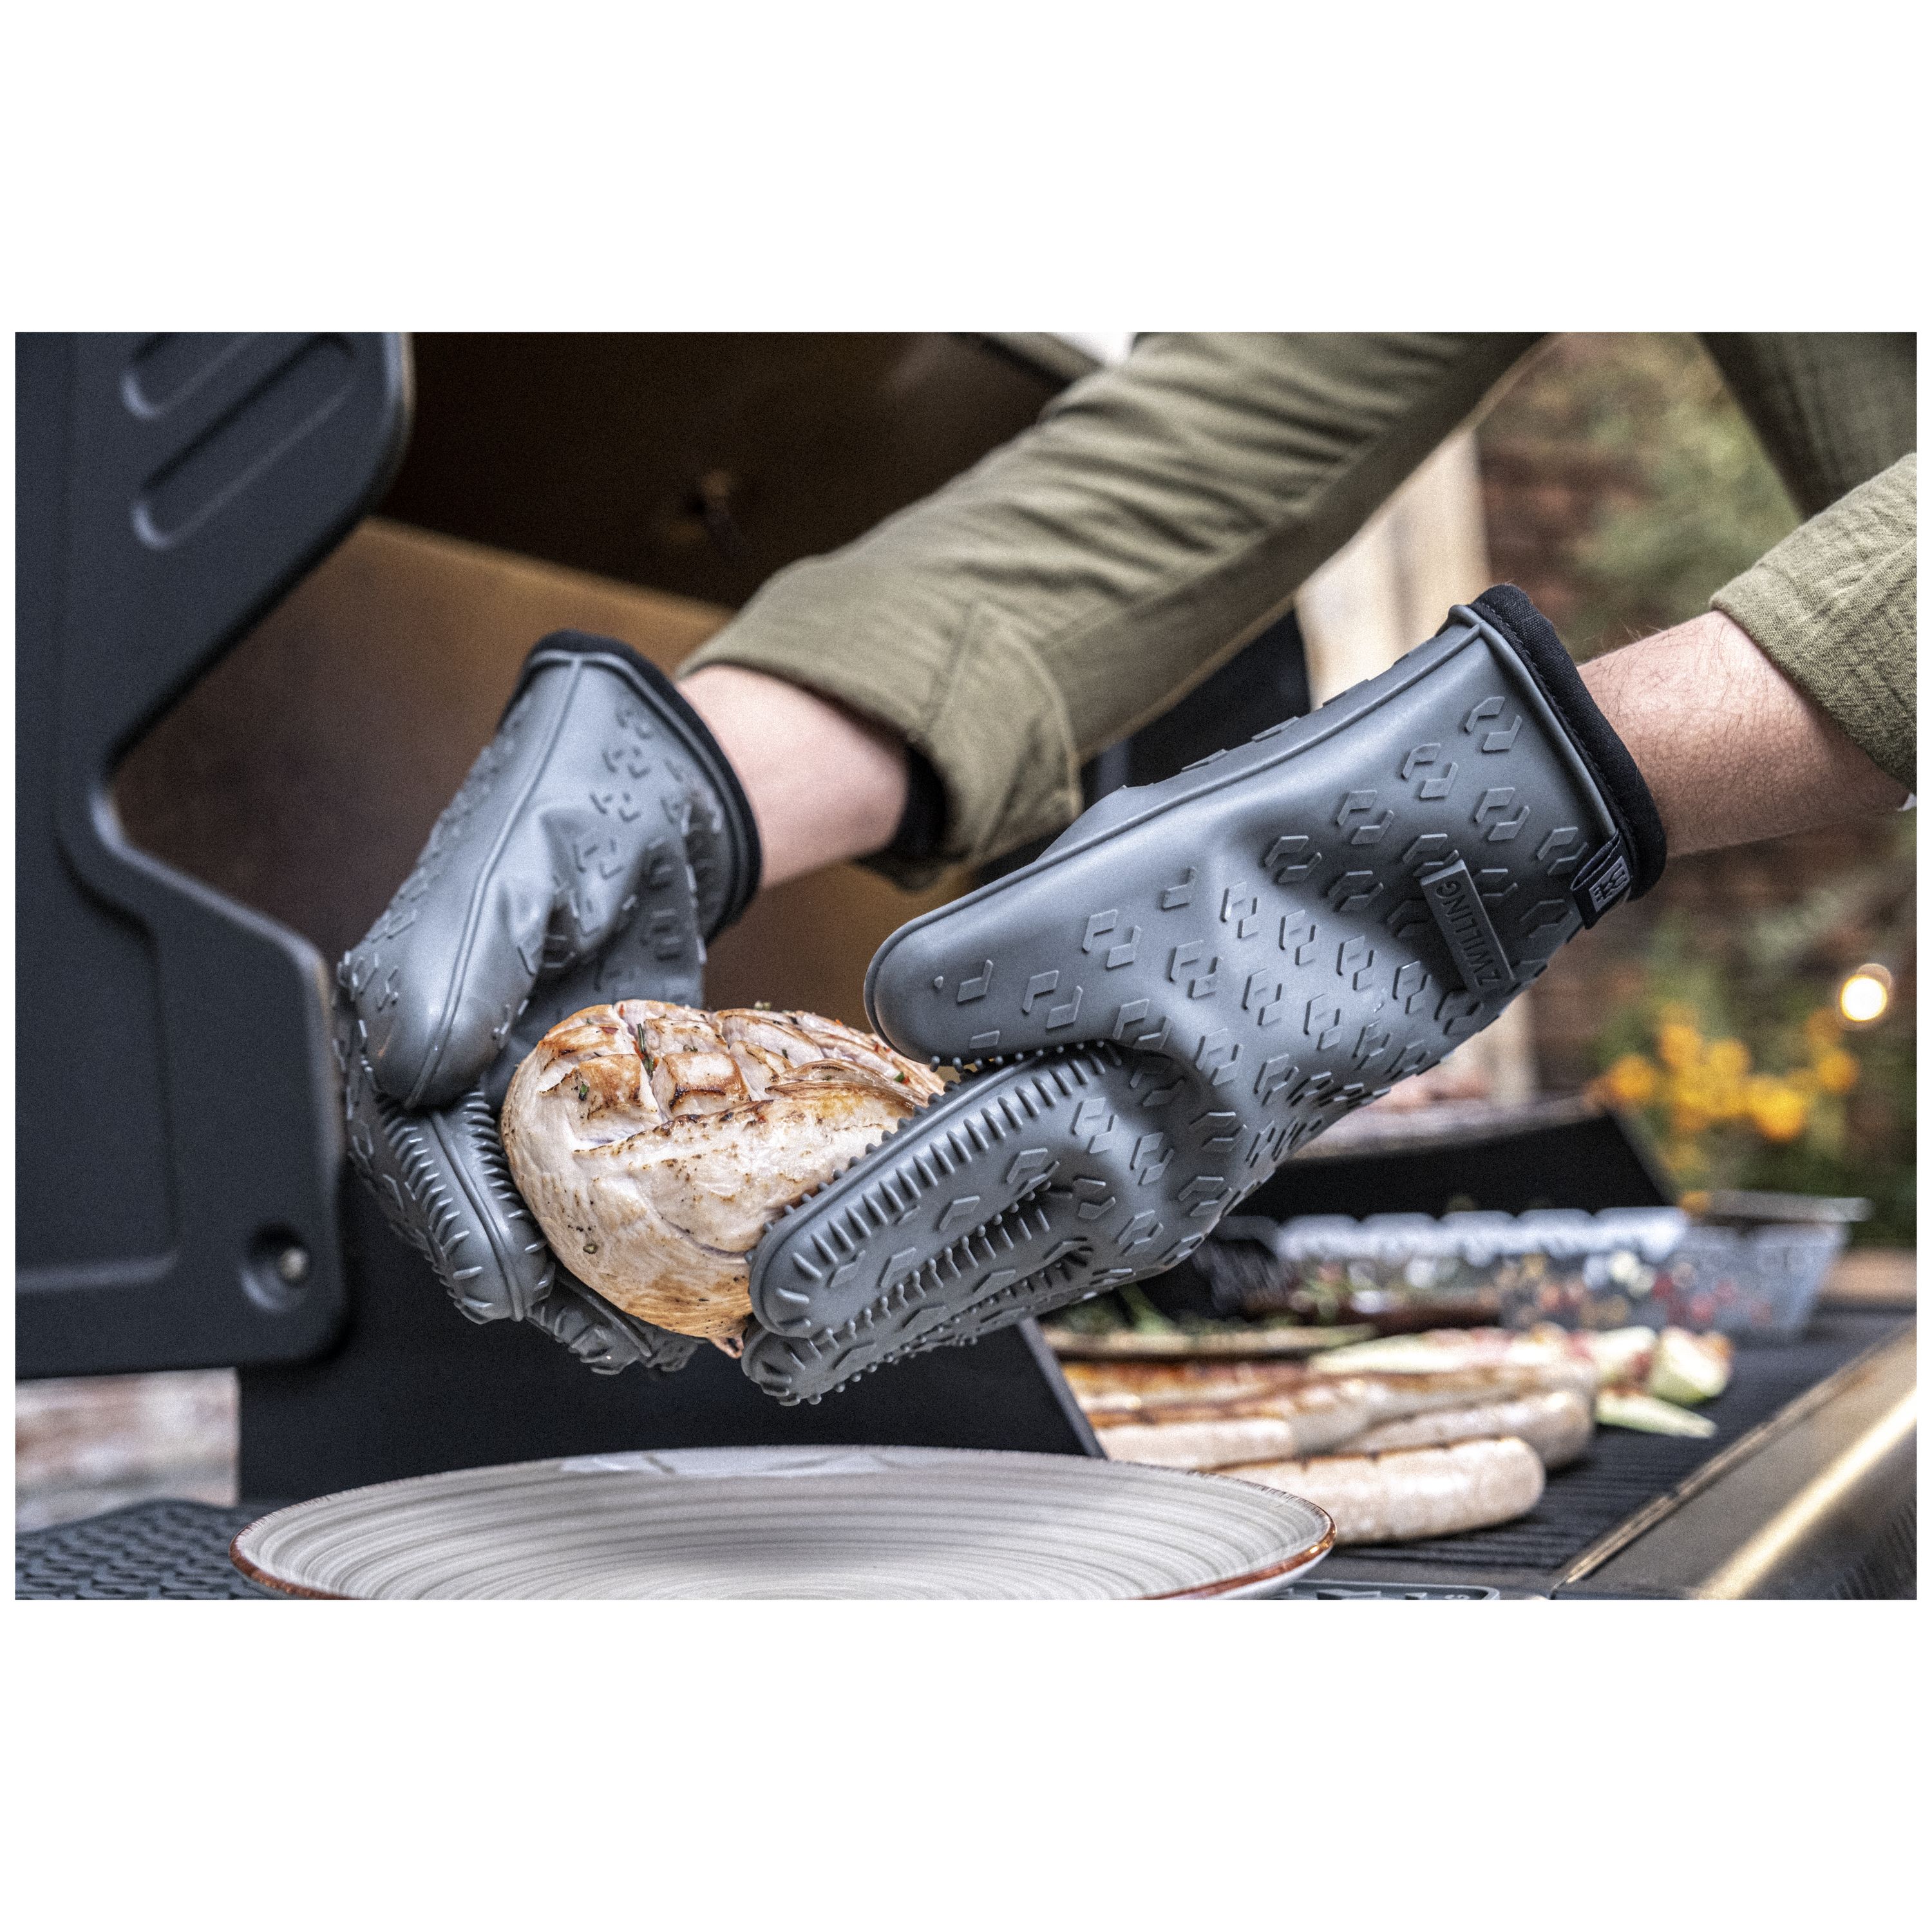 ZWILLING Z-Cut Cut resistant glove